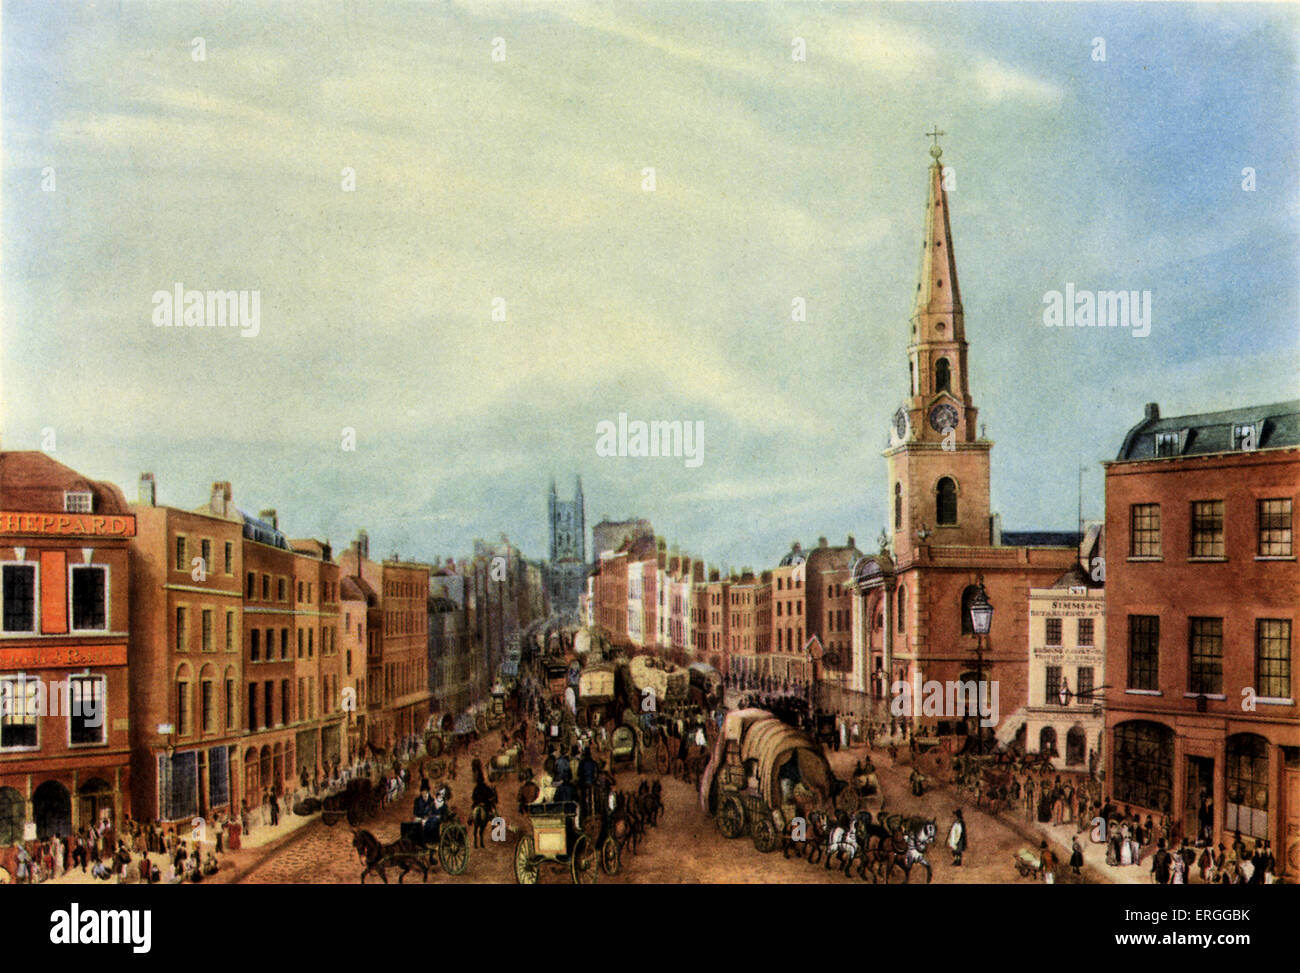 Borough High Street, Southwark von William Knox, 1826. Lonon, UK. Von Aquarell. Stockfoto